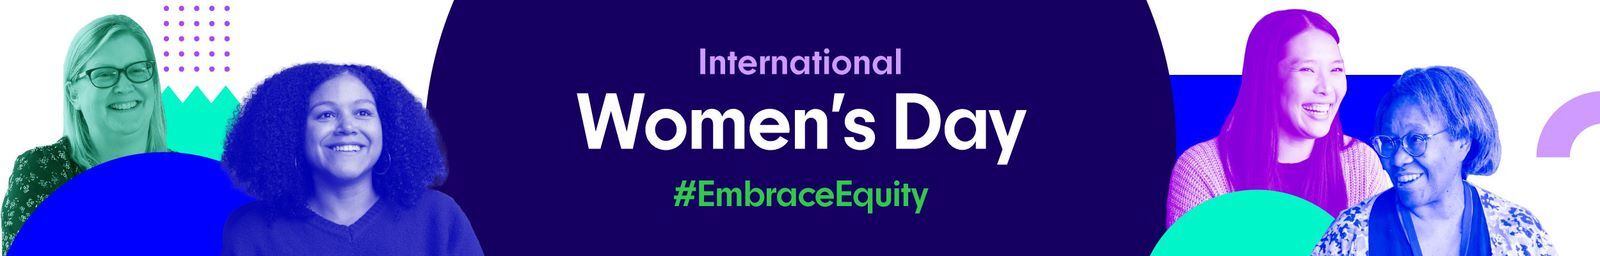 Banner of International Women's day